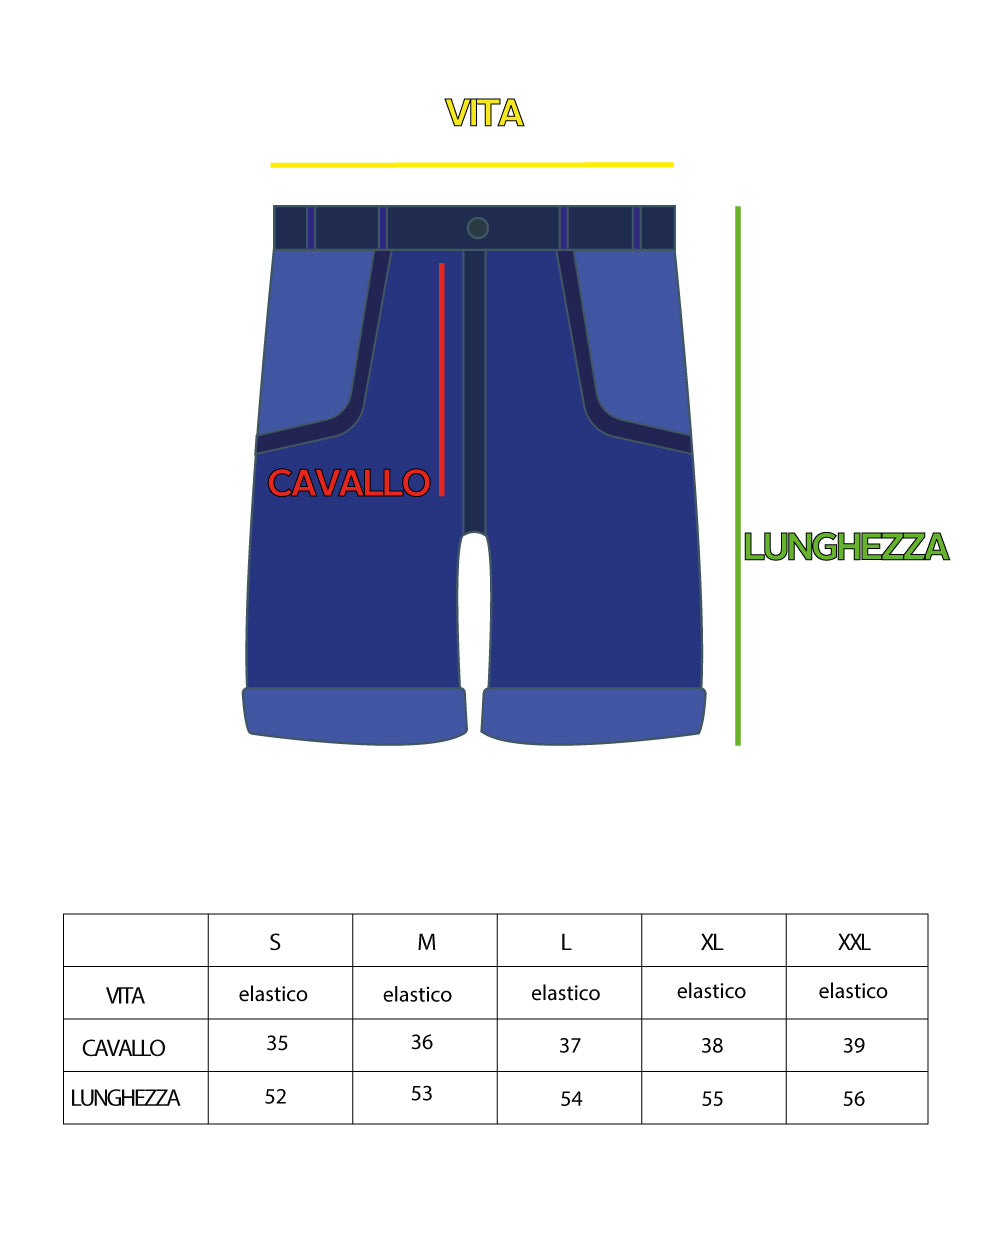 Completo Set Coordinato Uomo Cotone Viscosa T-Shirt Bermuda Outfit Viola GIOSAL-OU2309A